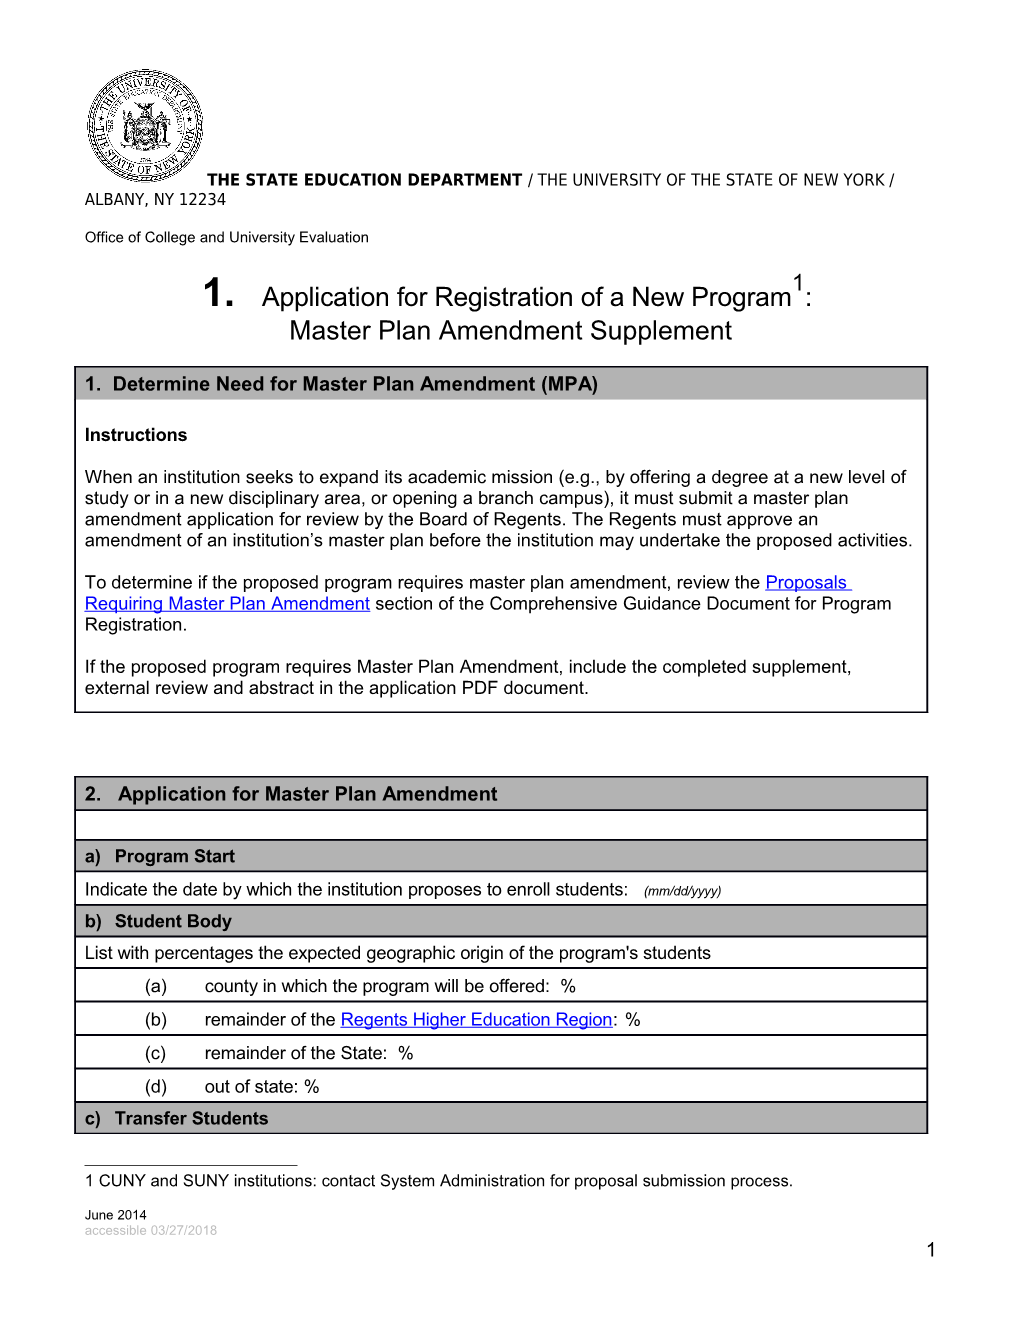 Task MPA 1 Determine Need for Master Plan Amendment (MPA)